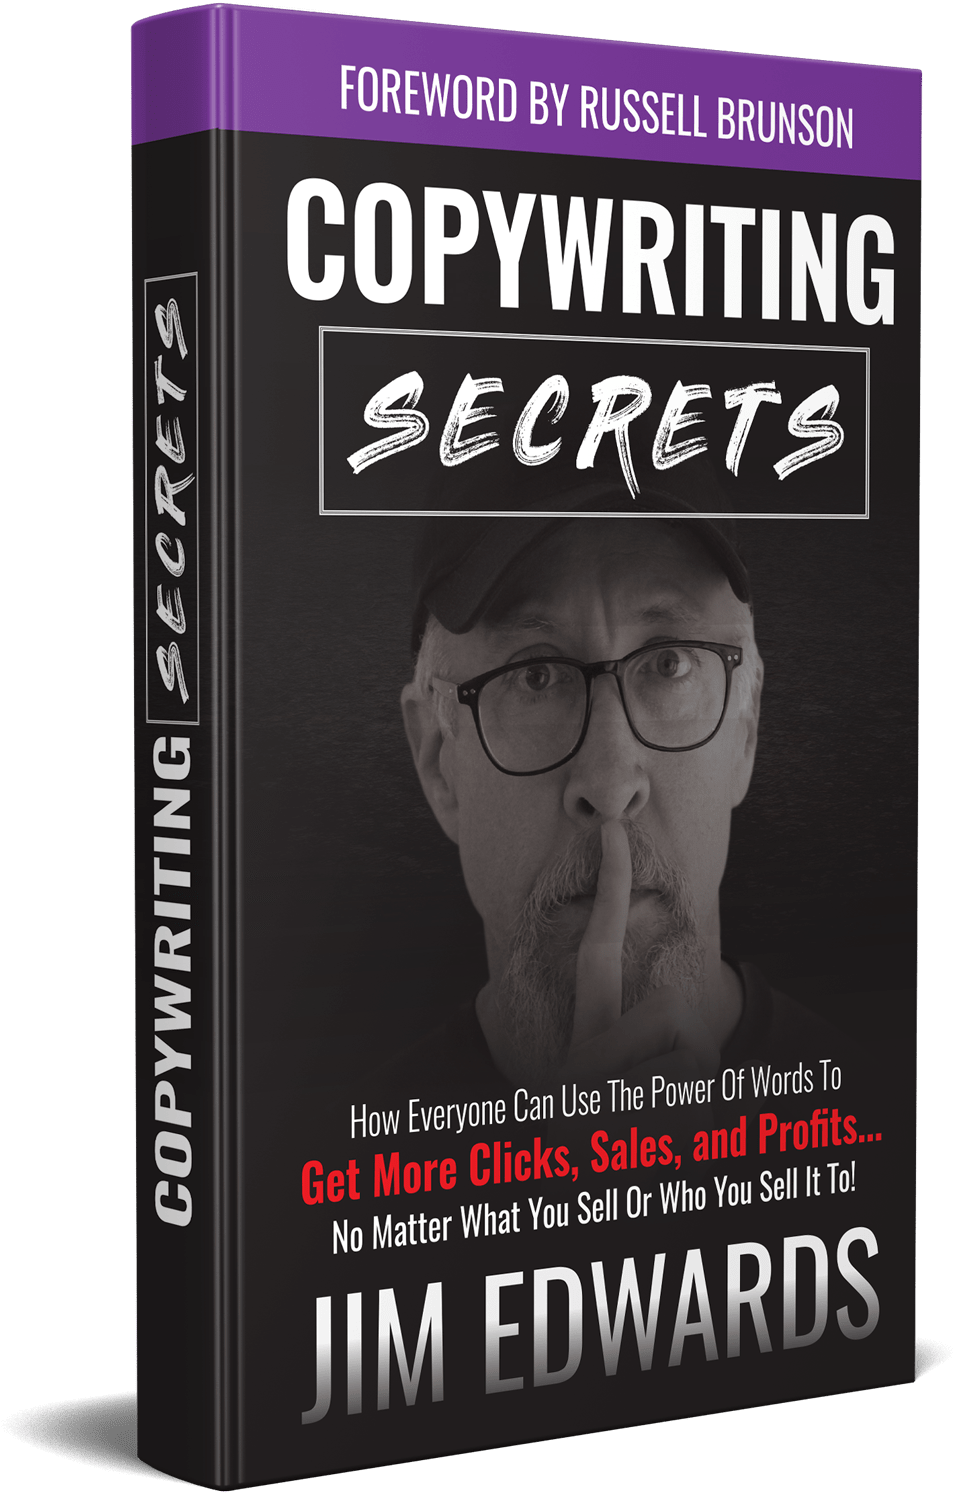 Die Copy Writing Secrets ErfahrungTop 5 E-Mail Marketing Bücher 2021